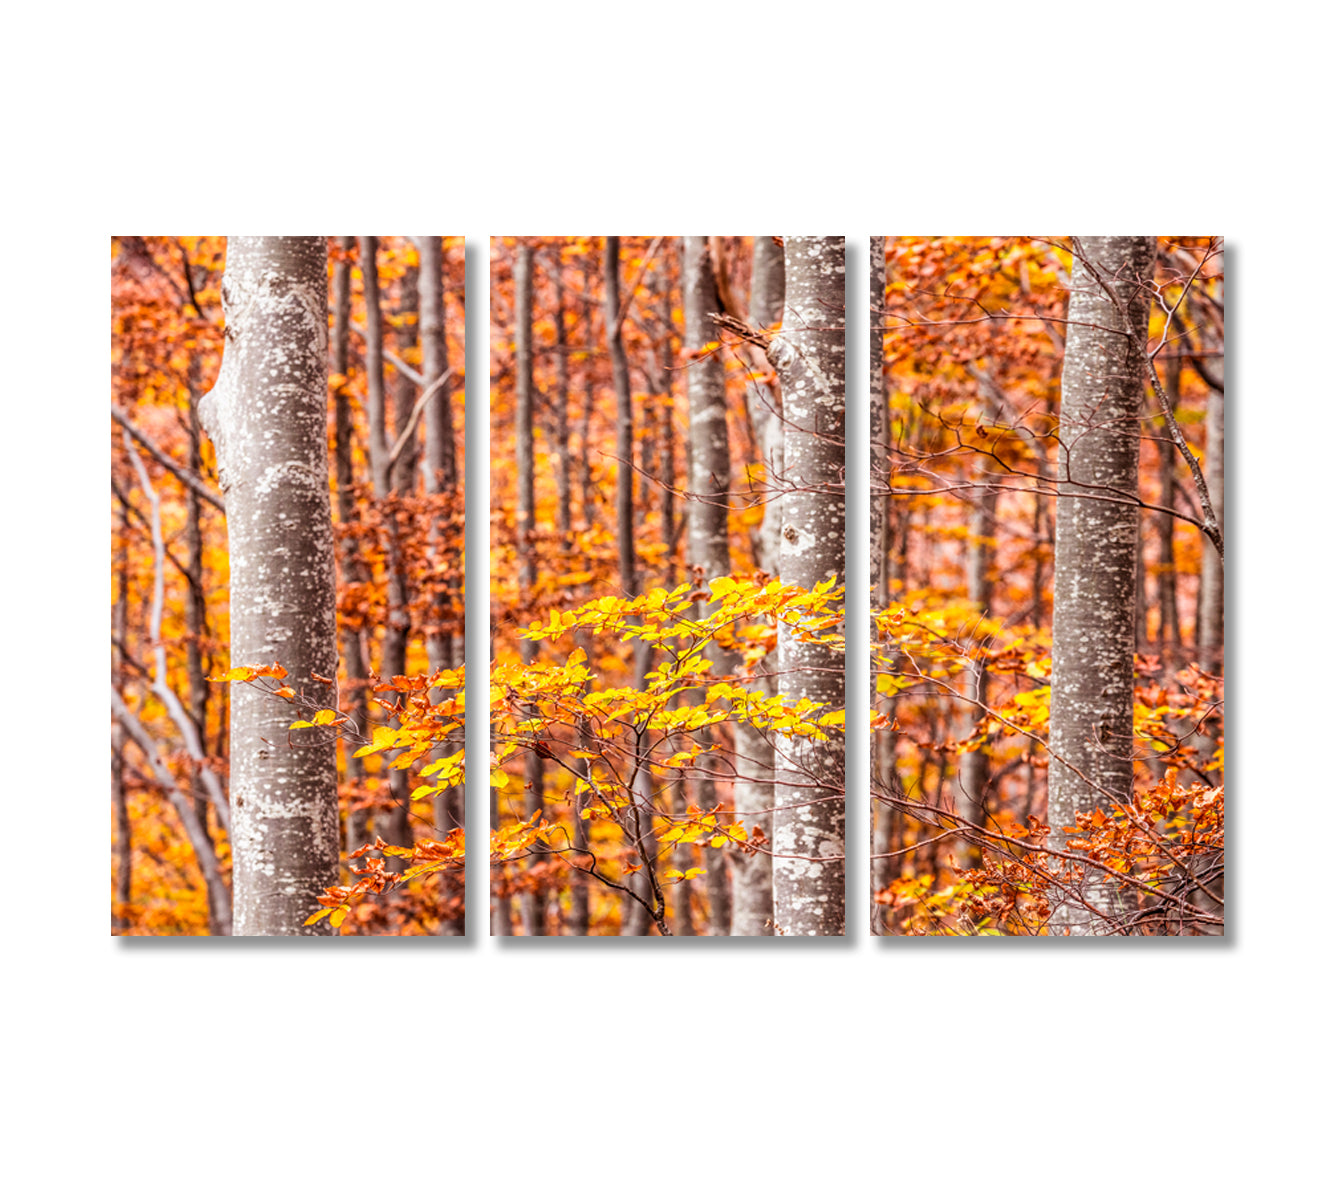 Autumn Beech Trees Forest Bologna Italy Canvas Print-Canvas Print-CetArt-3 Panels-36x24 inches-CetArt